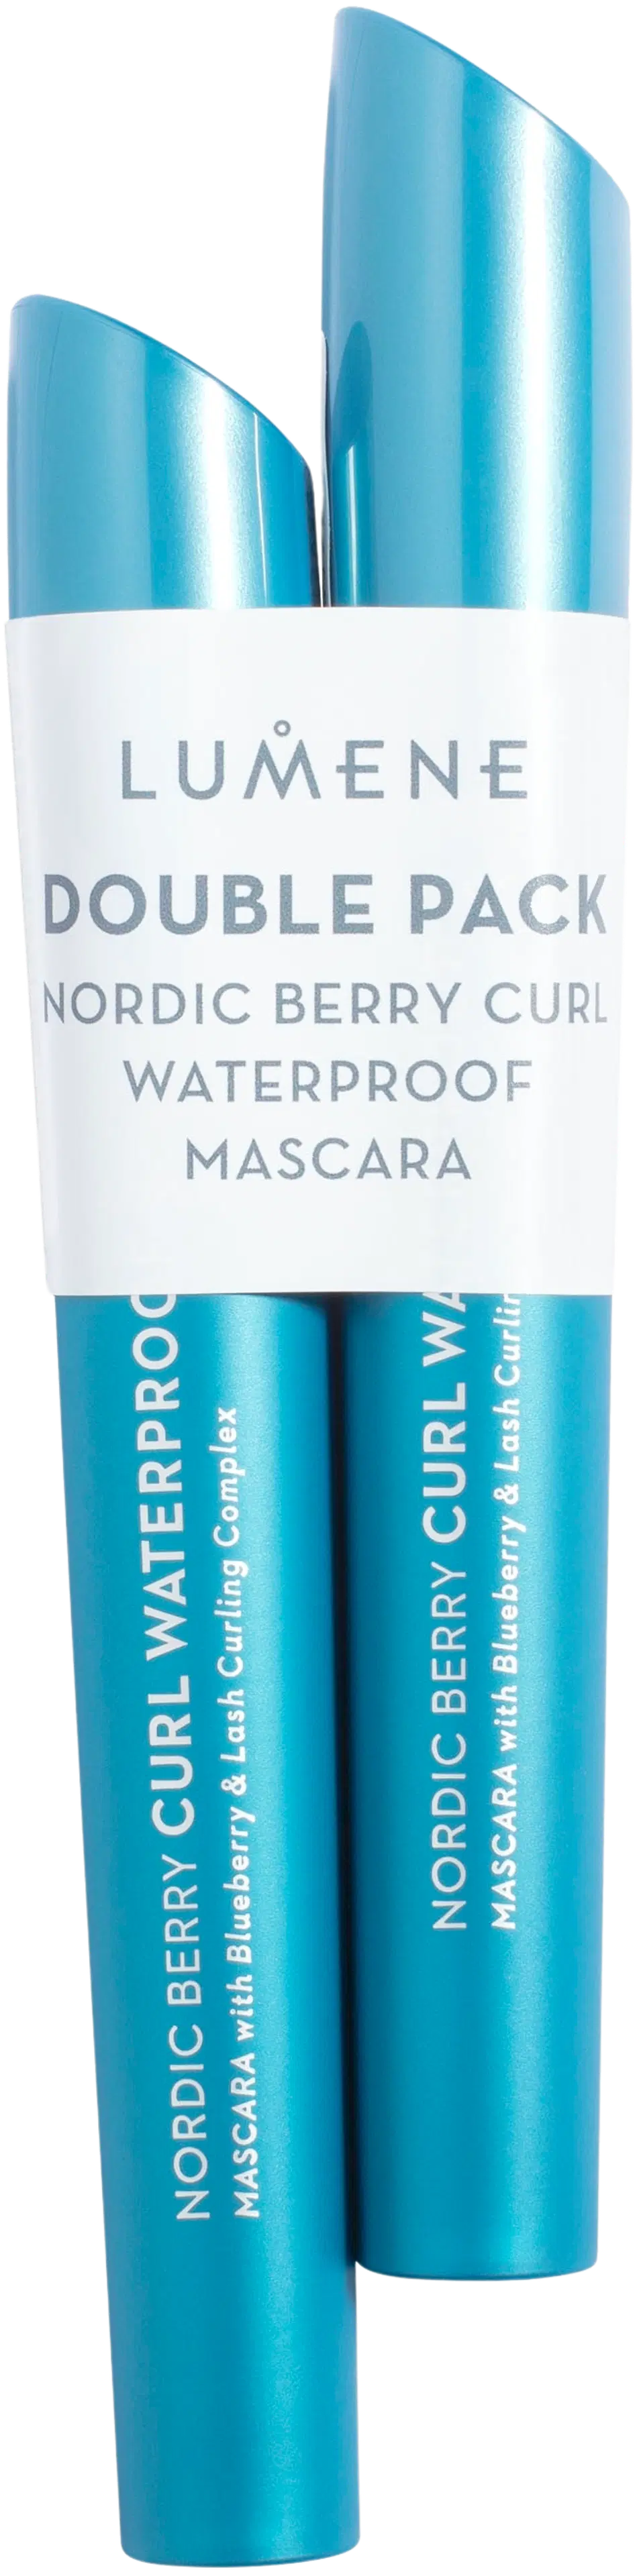 Lumene Nordic Berry Curl Mascara Waterproof tuplapakkaus